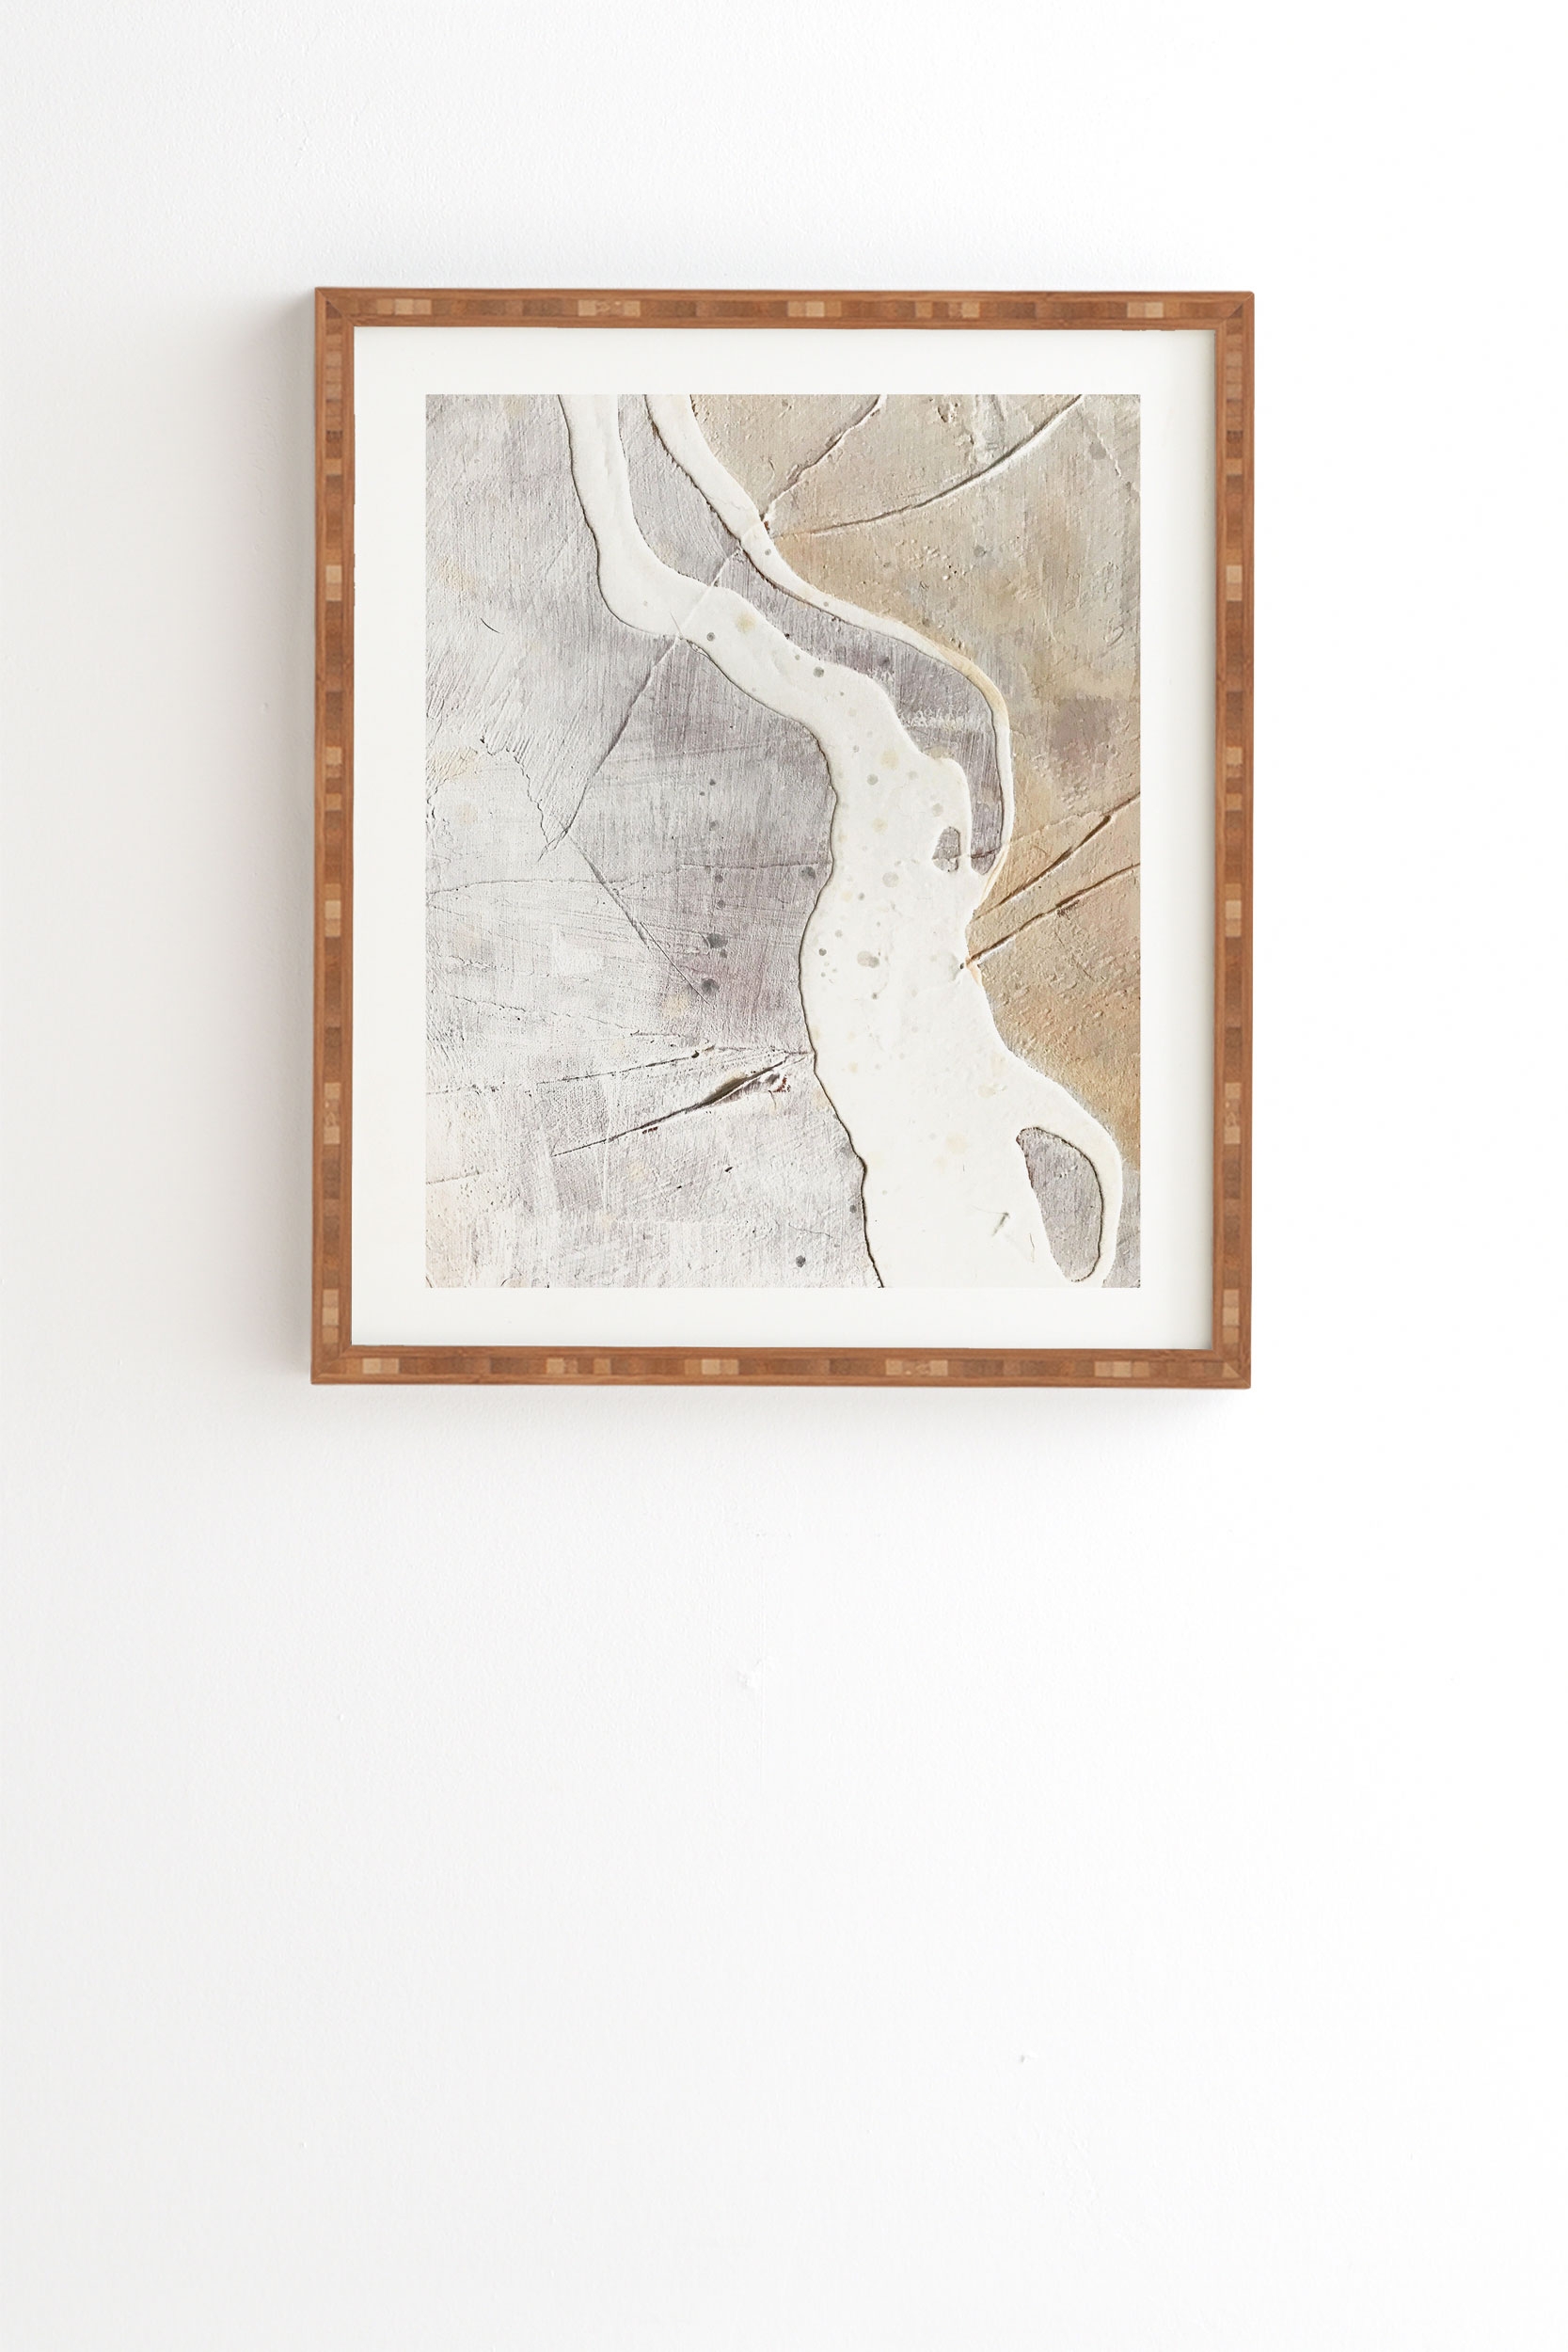 Feels by Alyssa Hamilton Art - Framed Wall Art Bamboo 30" x 30" - Image 1